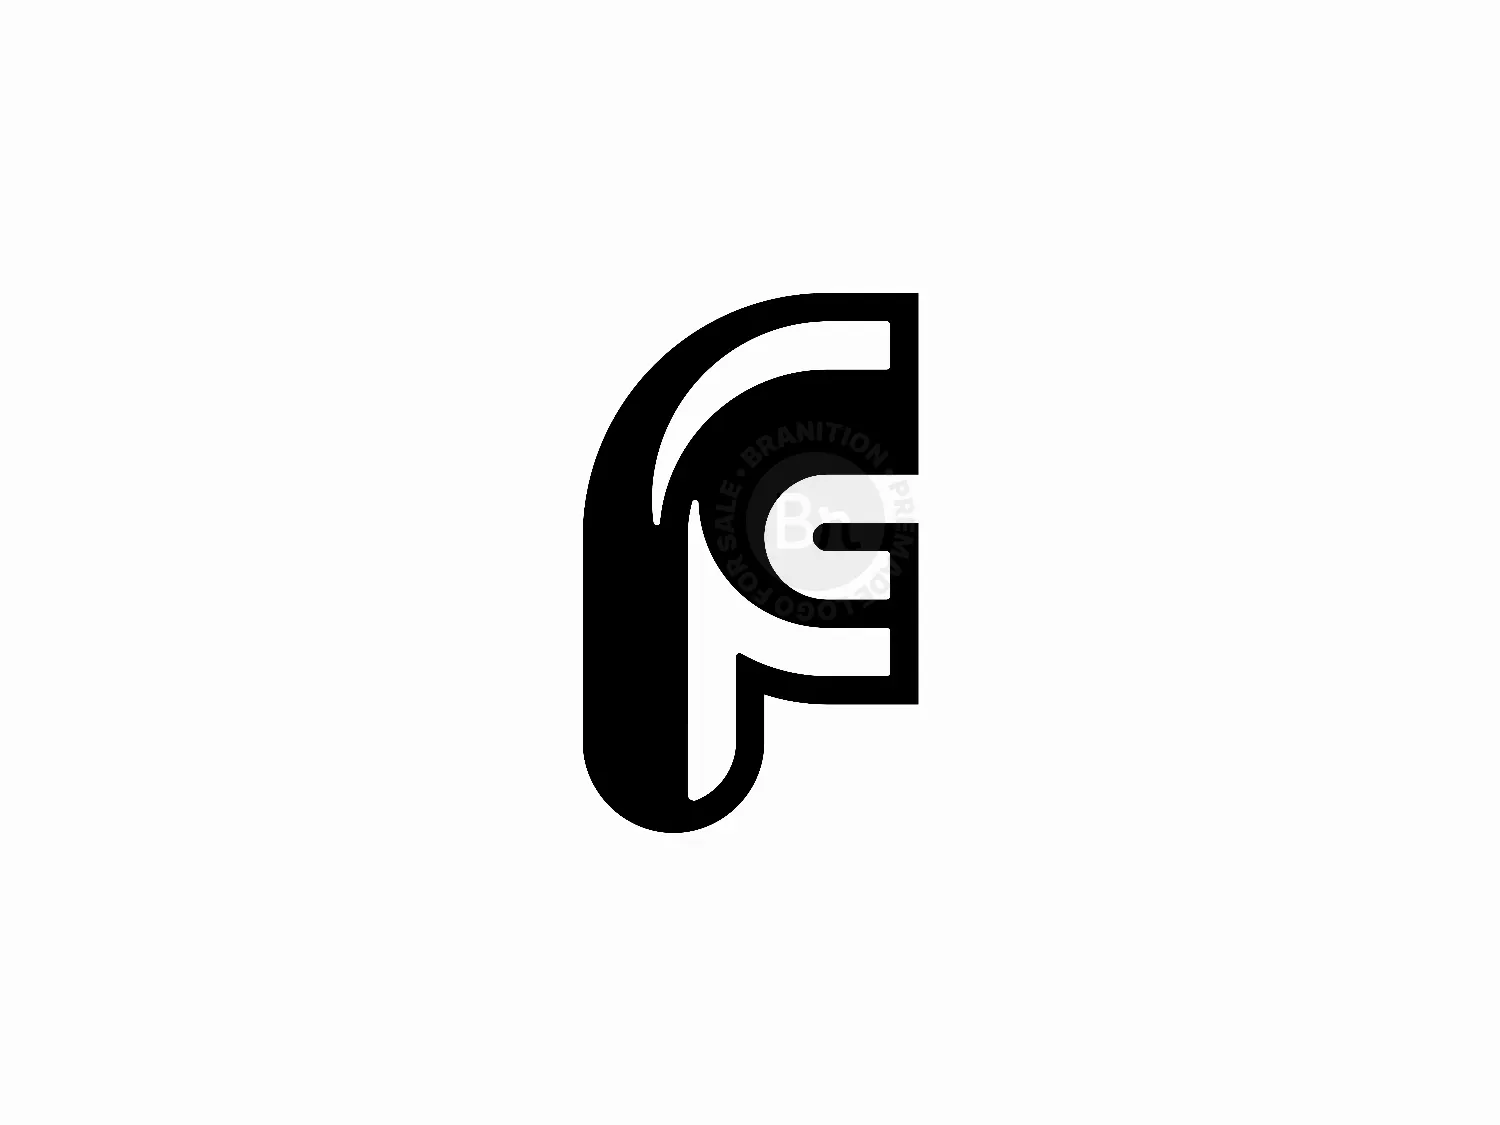 100,000 Gf logo Vector Images | Depositphotos